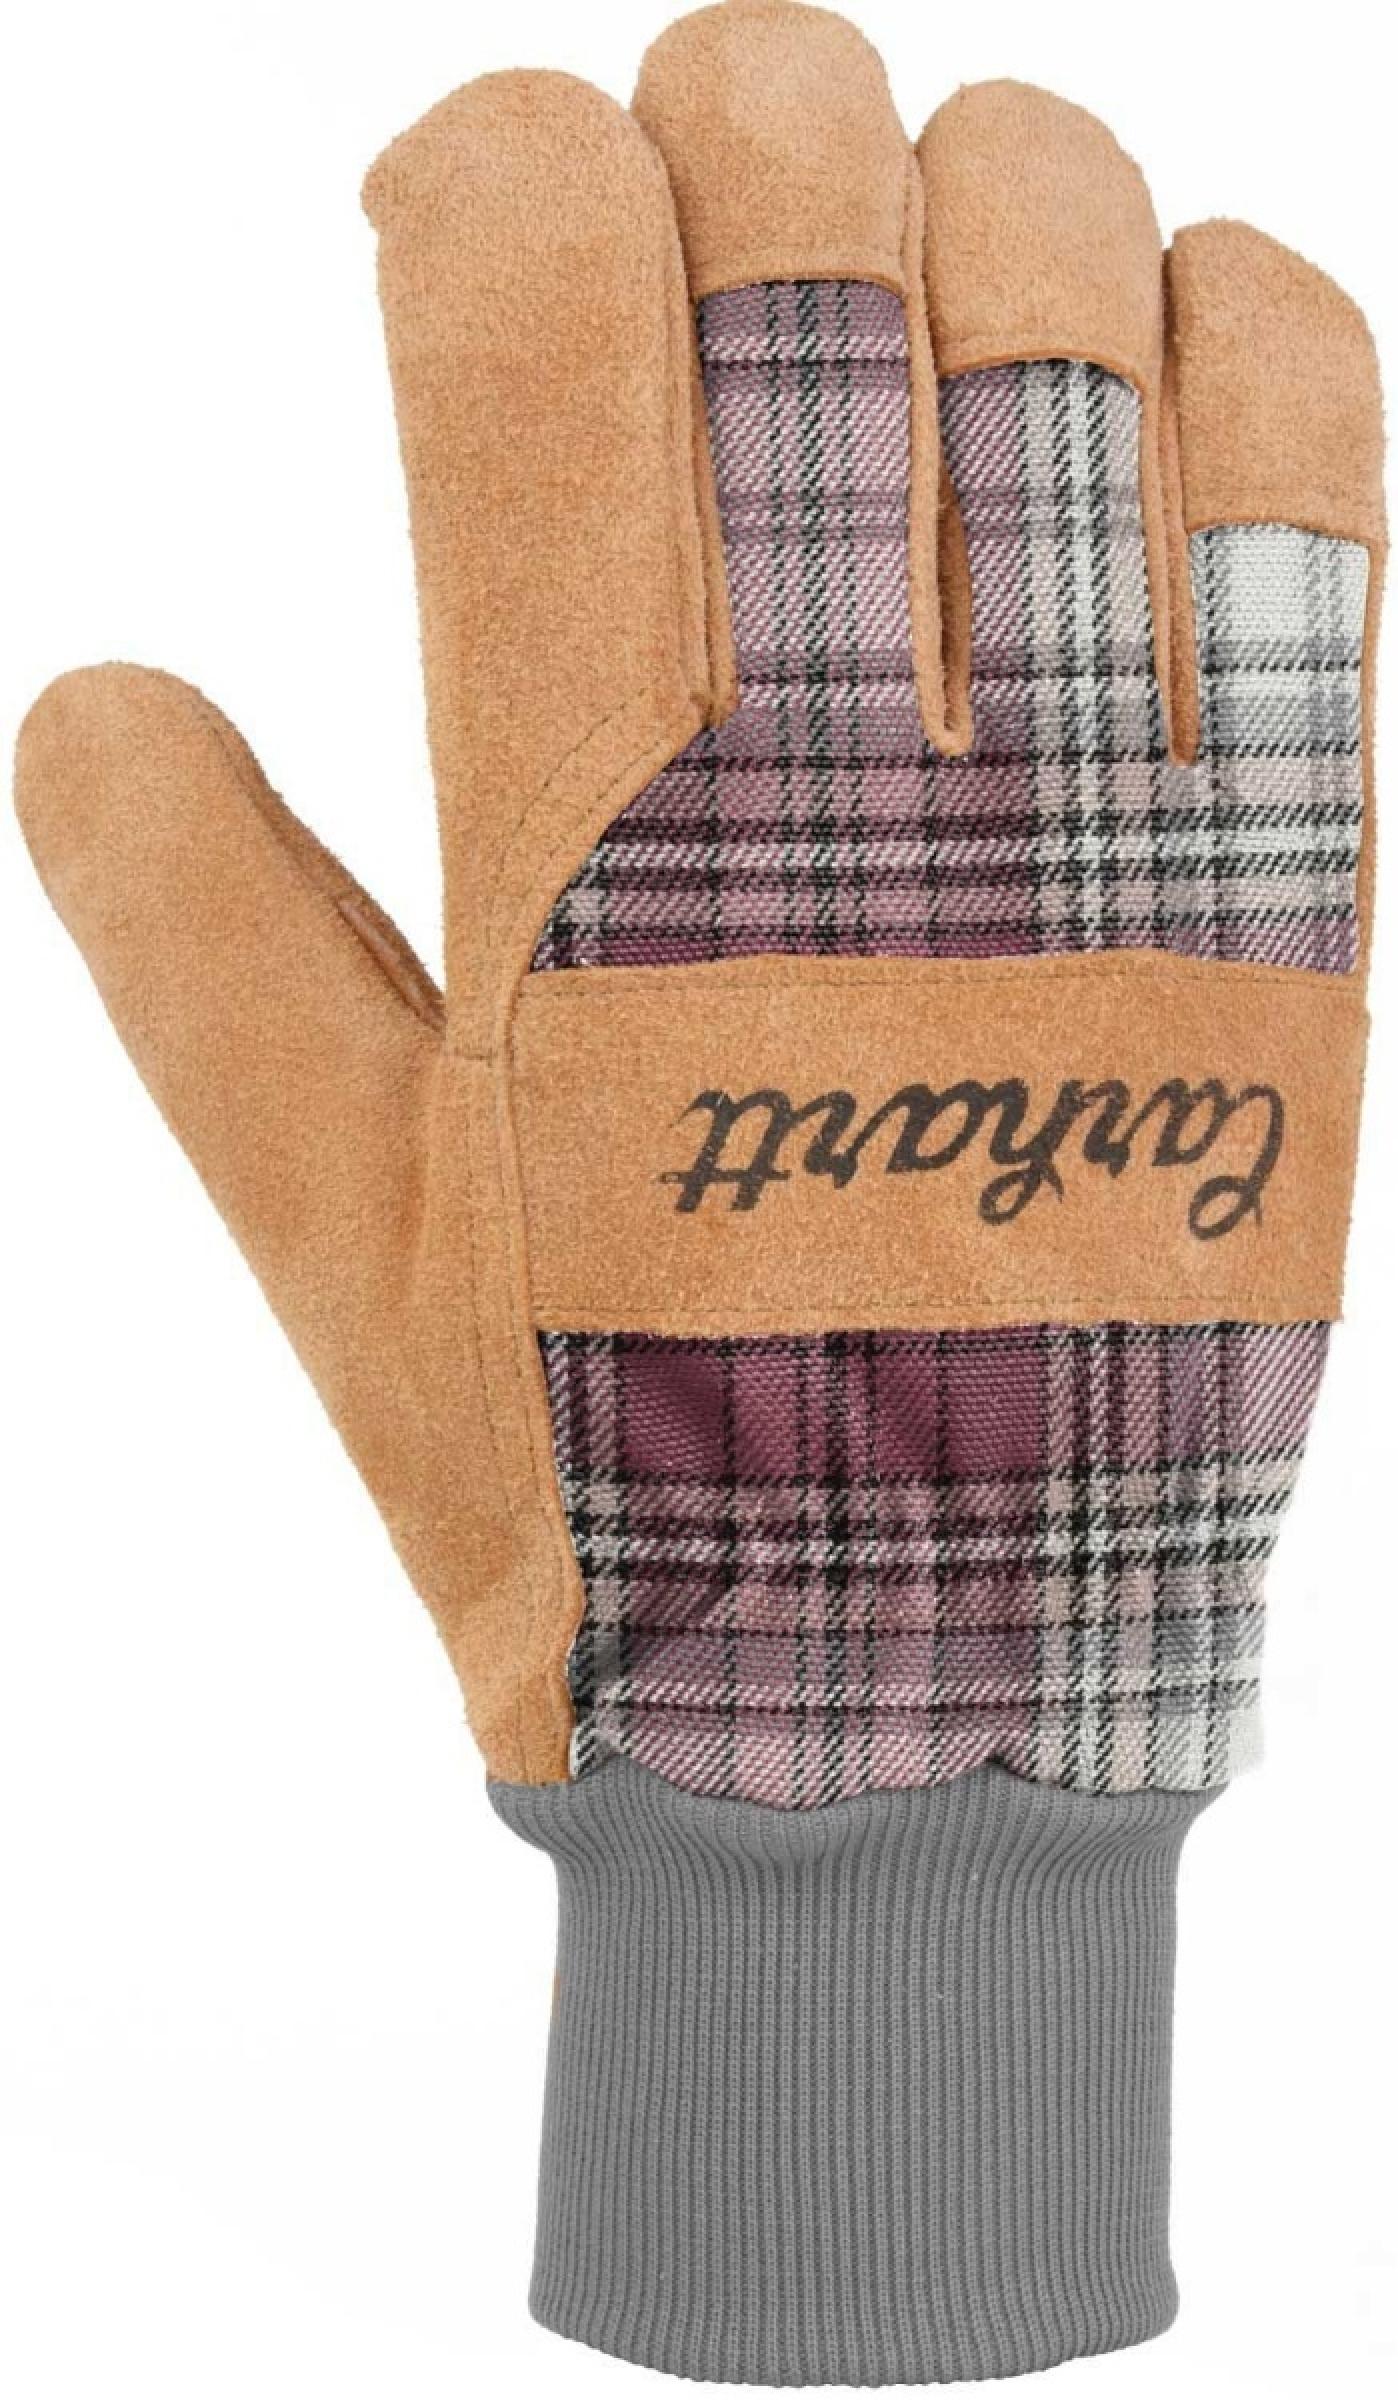 Carhartt Insulated Suede Knit Cuff Work Glove